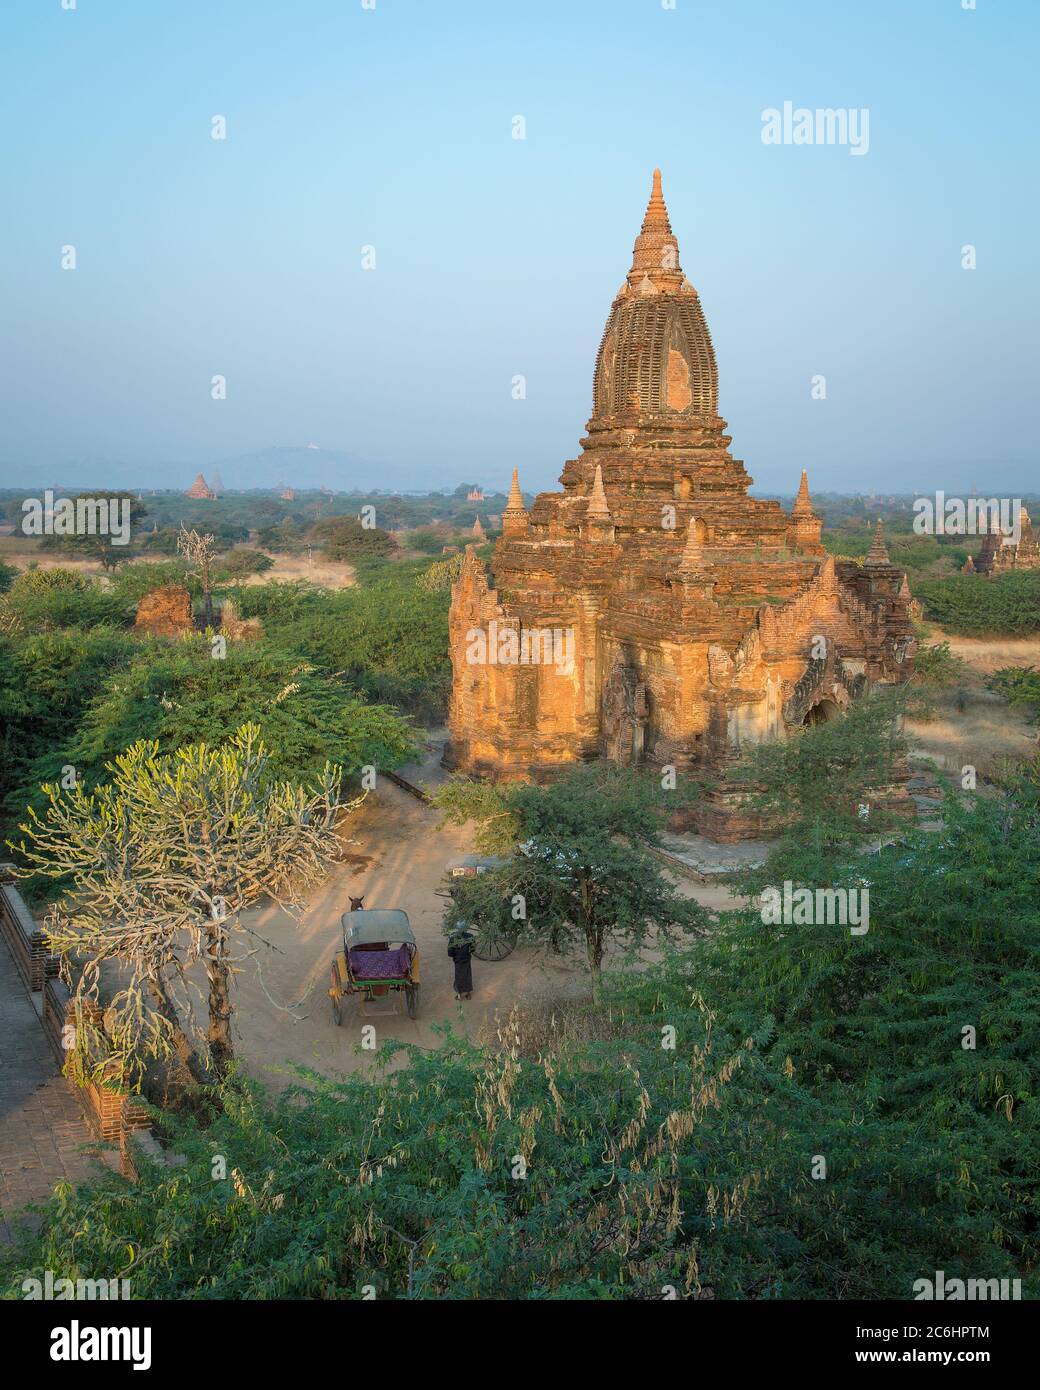 myanmar temples